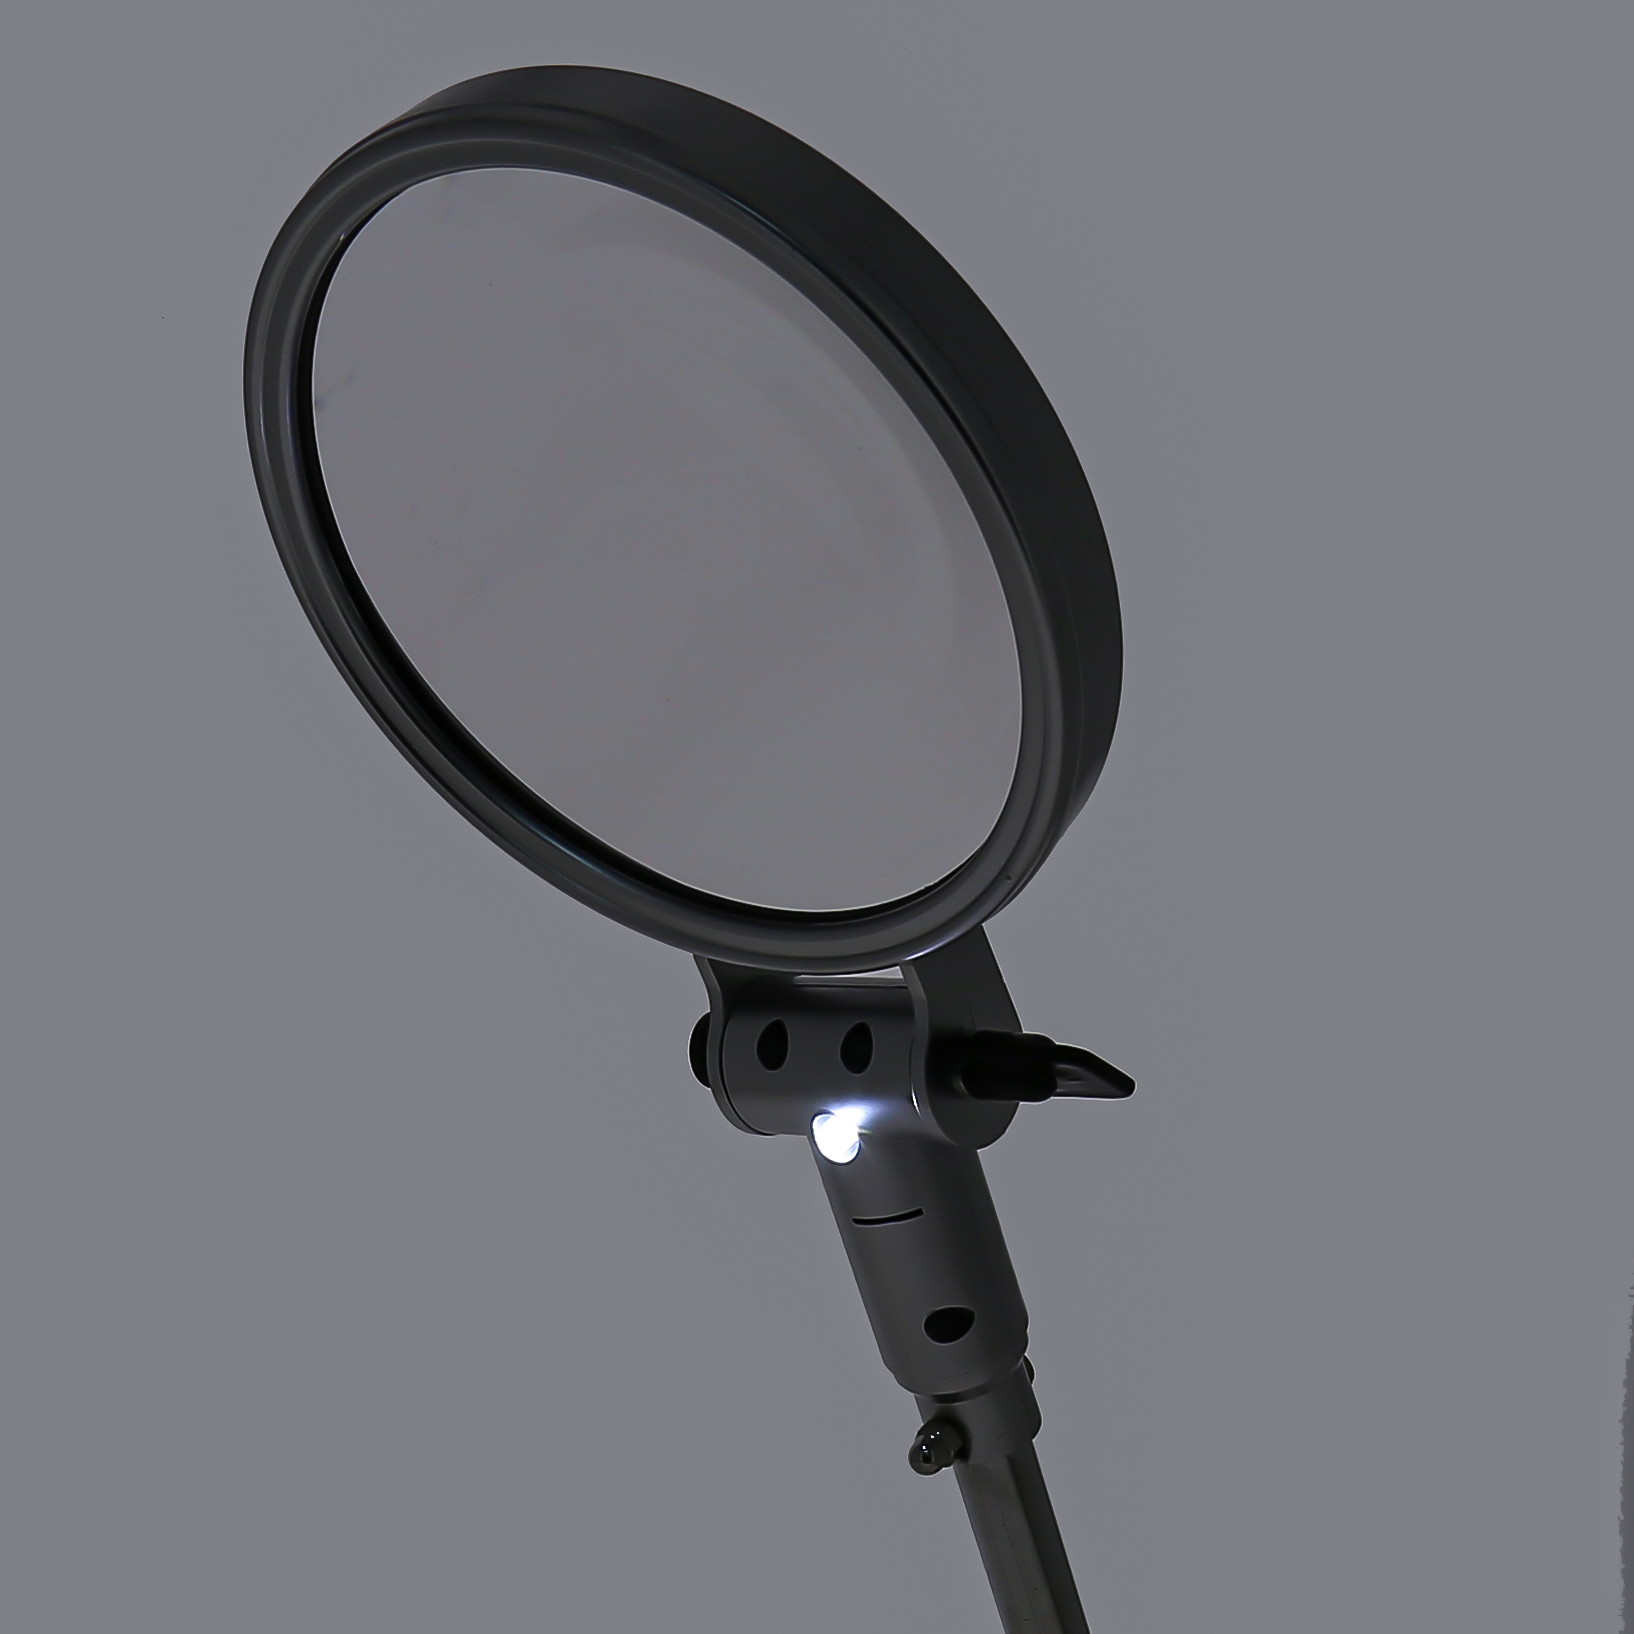 Лупа с подсветкой диаметр 130 мм. Двухкратная,  артикул  MG 83024-2. # 4 hobbyplus.ru